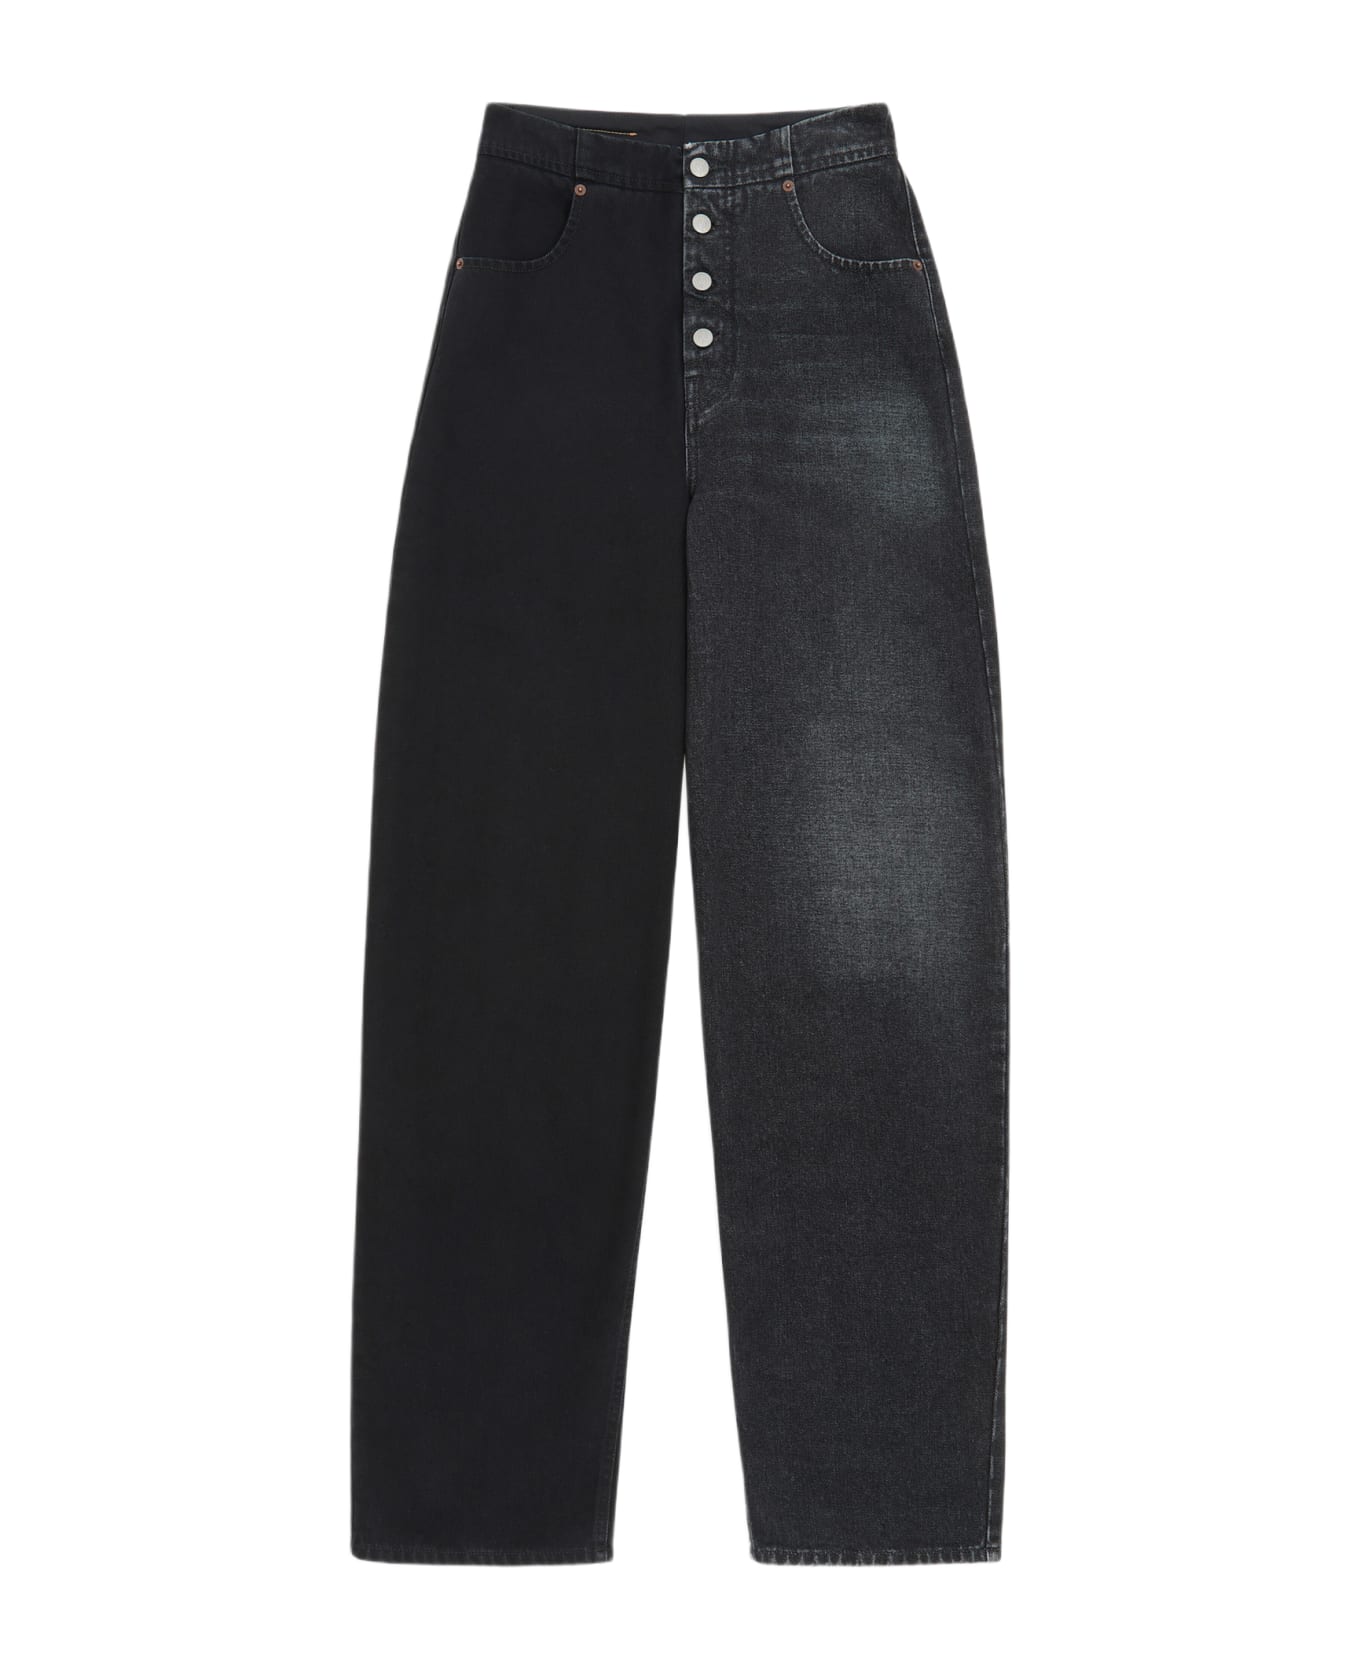 MM6 Maison Margiela Pantalone 5 Tasche Black and grey half and half baggy fit jeans - Denim nero